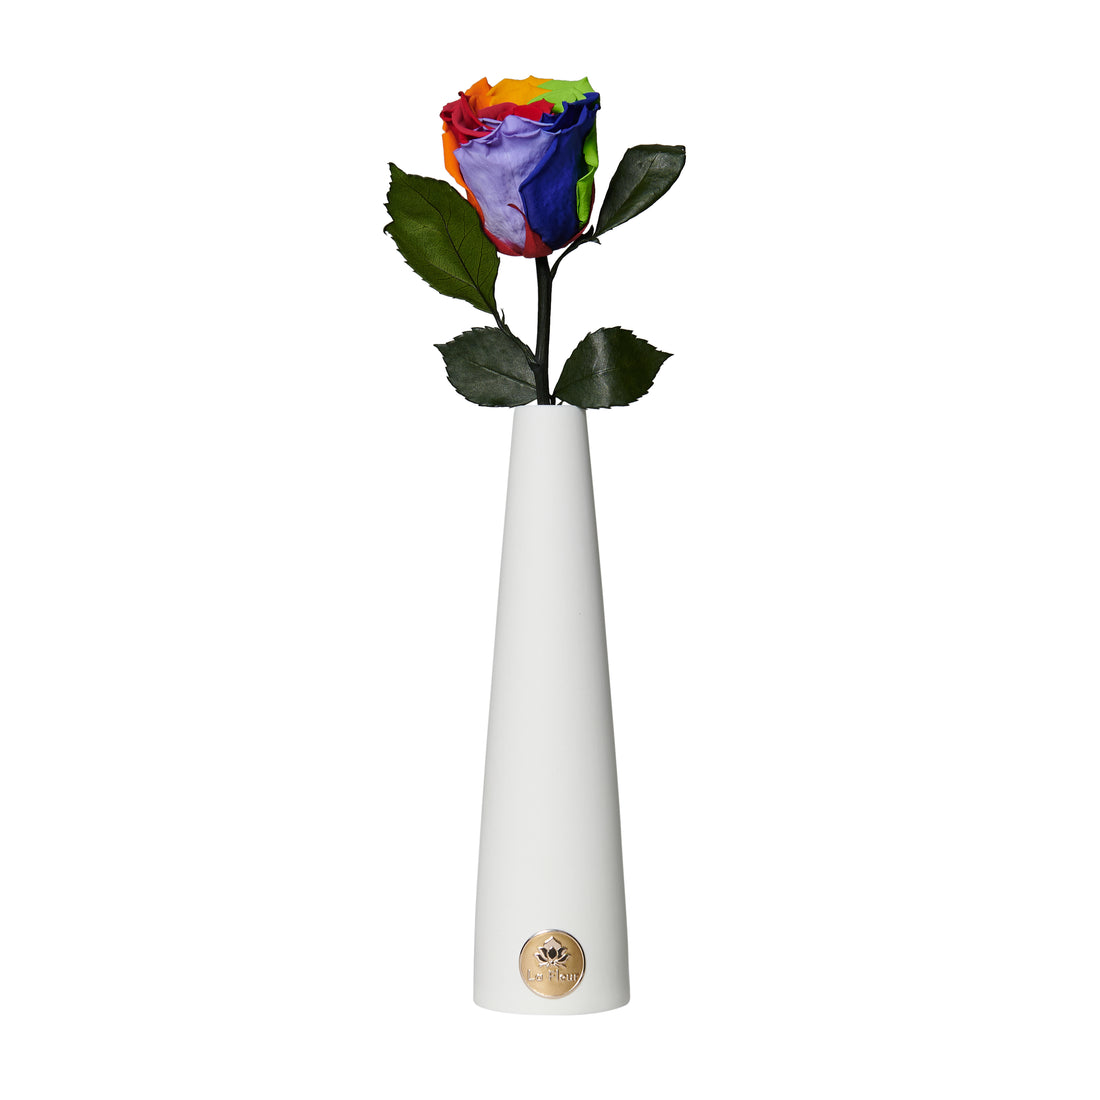 Single Stem by La Fleur Lifetime Flowers